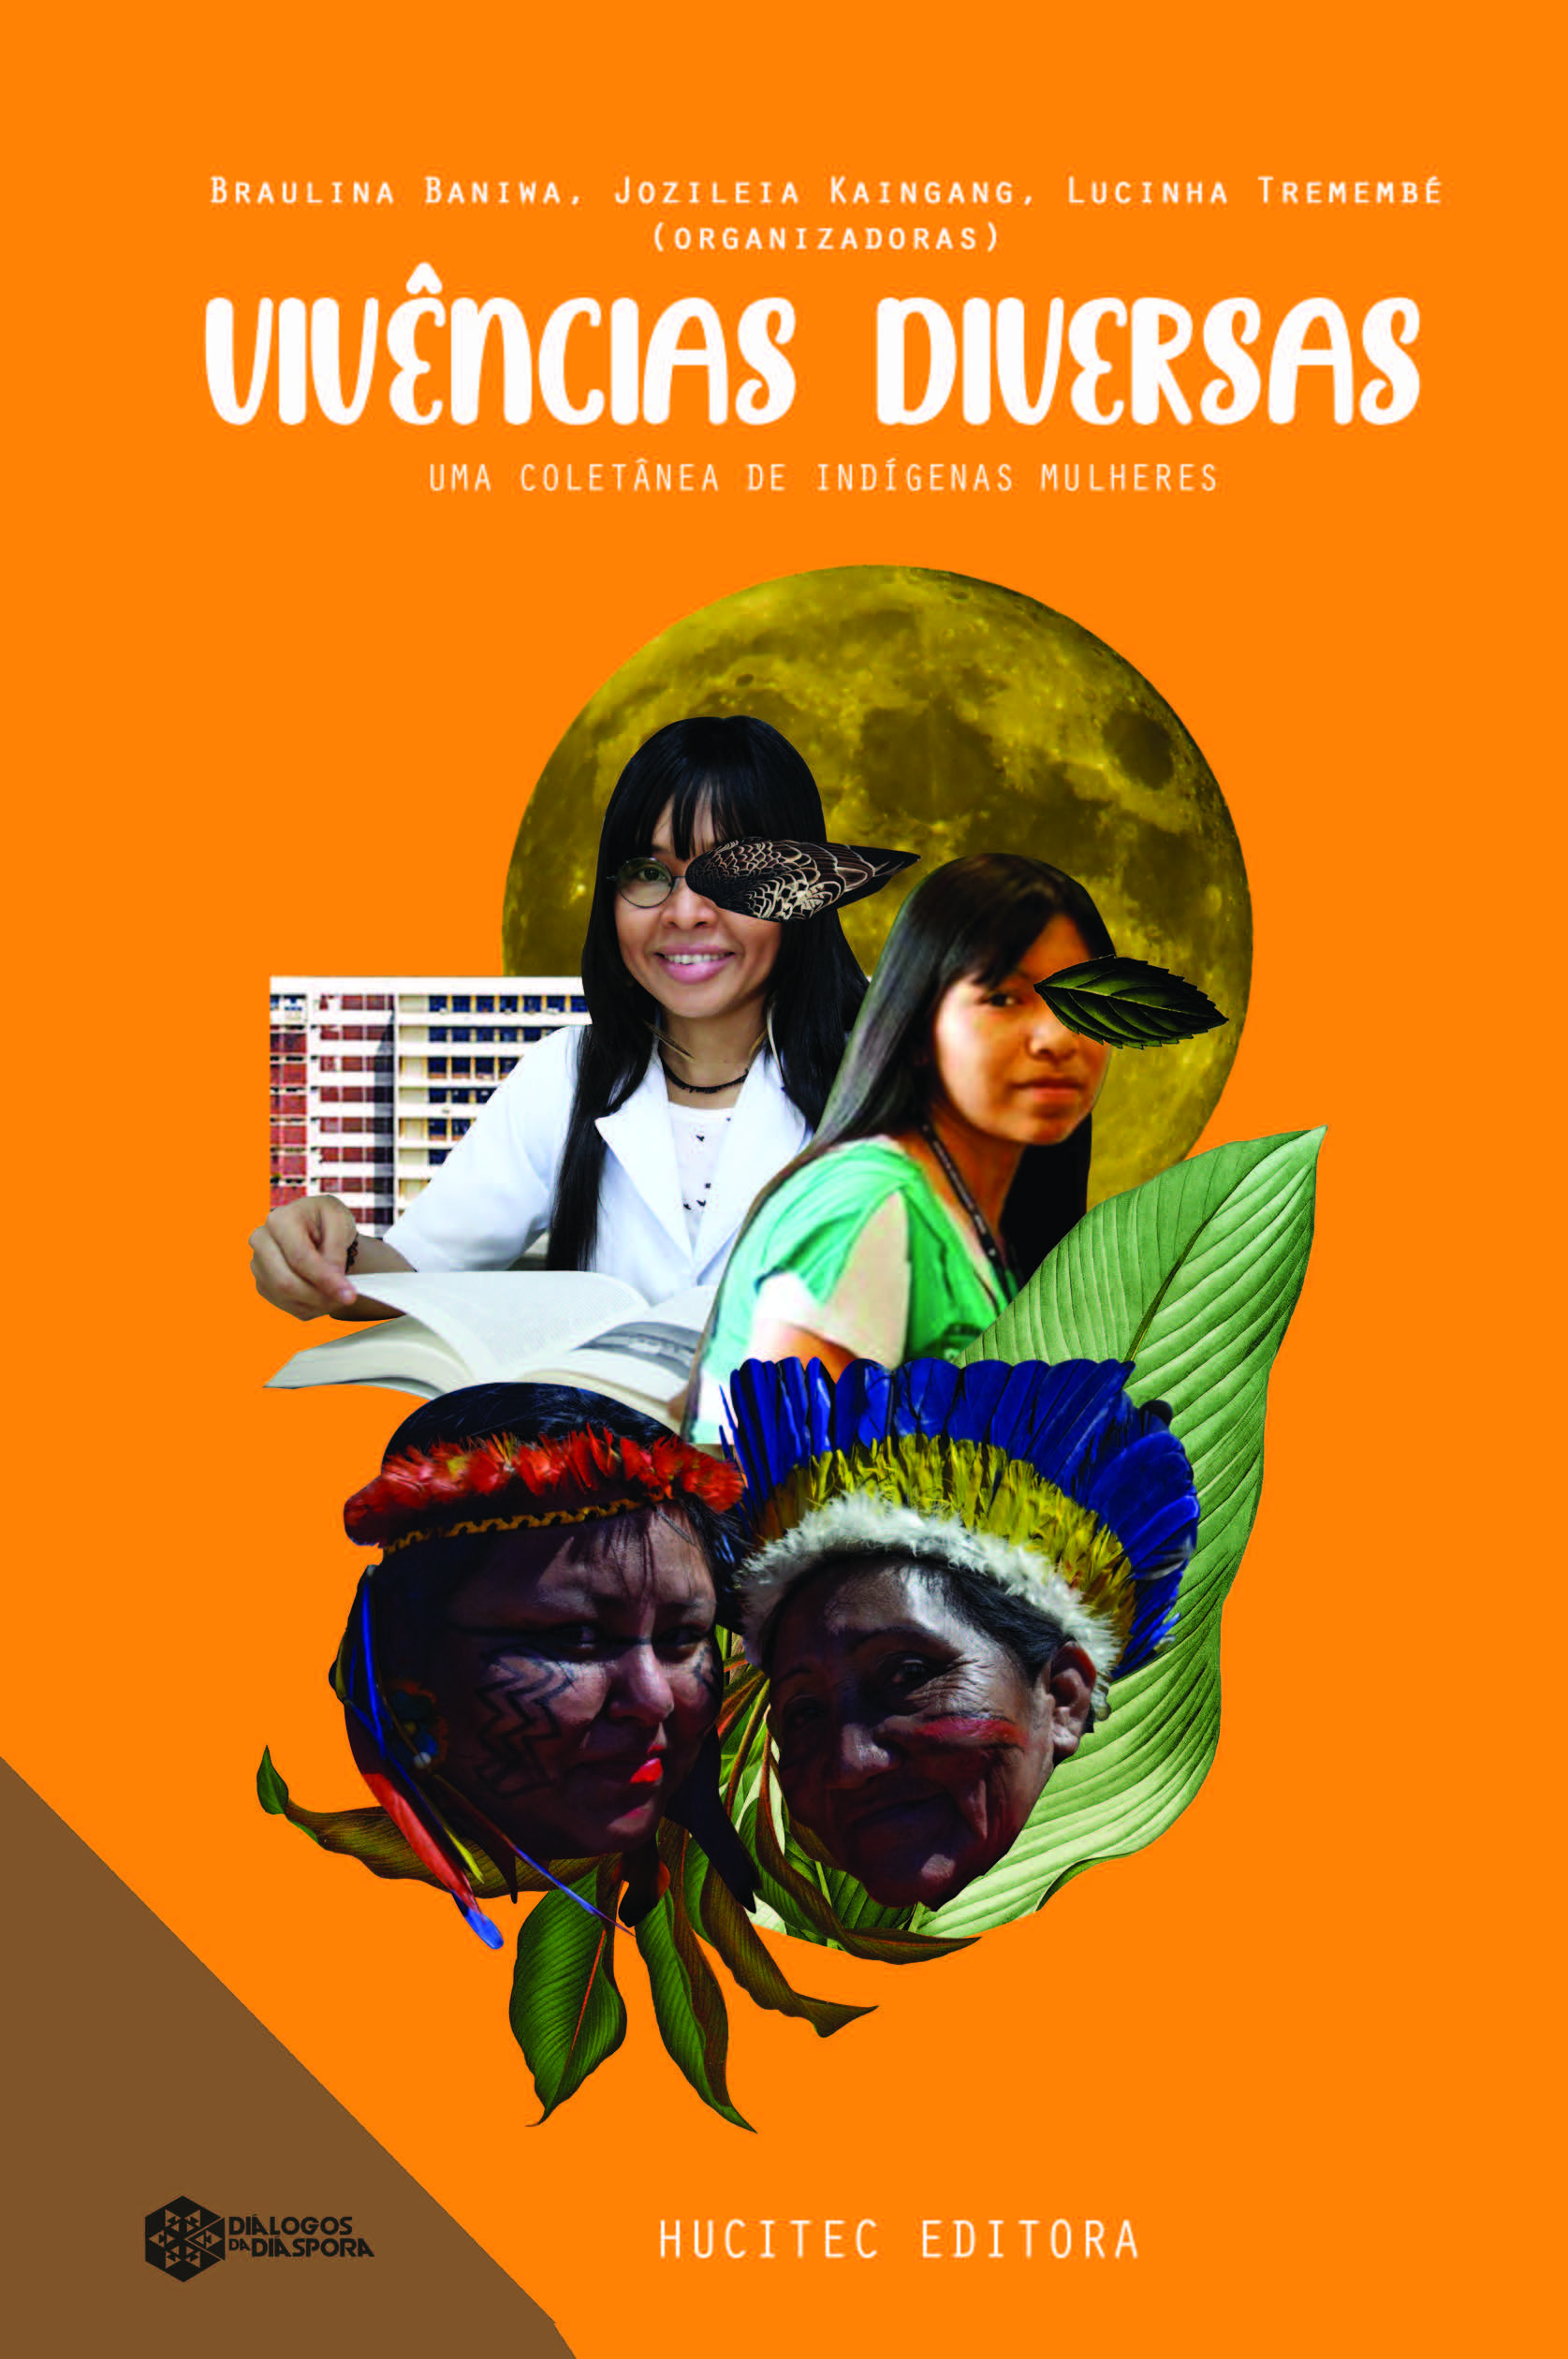 Braulina Baniwa, Jozileia Kaingang, Lucinha Tremembé: Vivências diversas (Paperback, Portuguese language, 2020, Hucitec Editora)